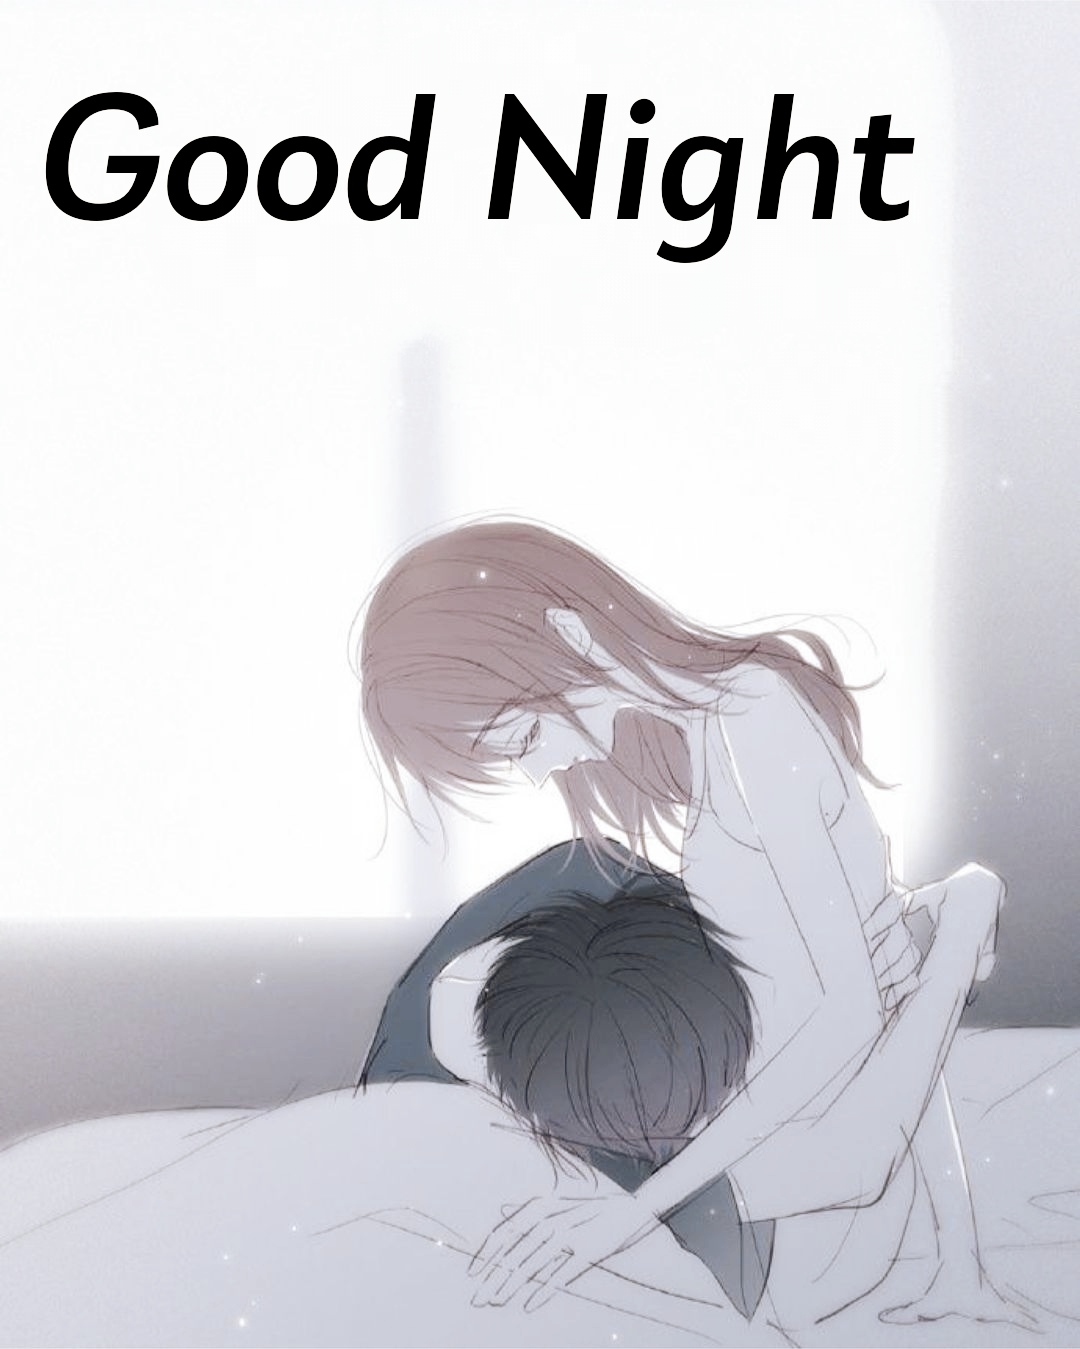 Good Night Love Images For Boyfriend